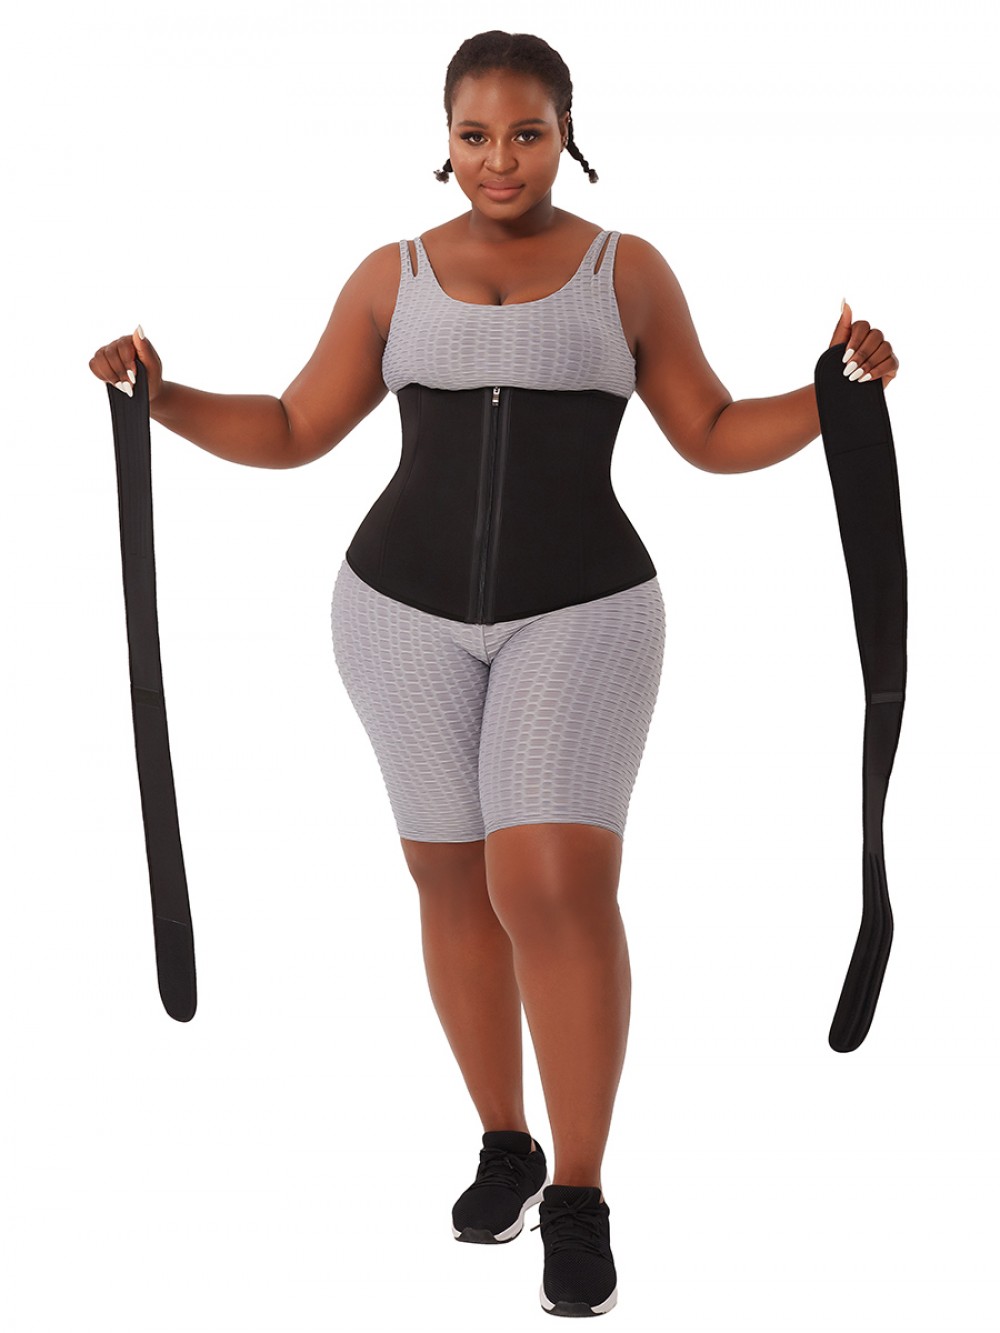 Black Neoprene Waist Trainer Big Size Detachable Belts Waist Control